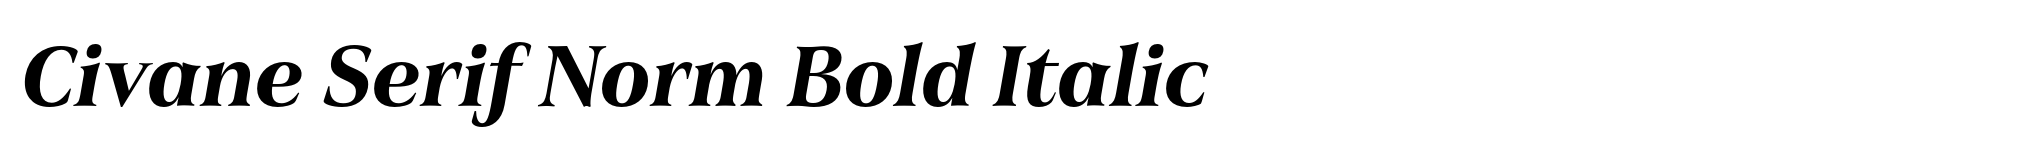 Civane Serif Norm Bold Italic image